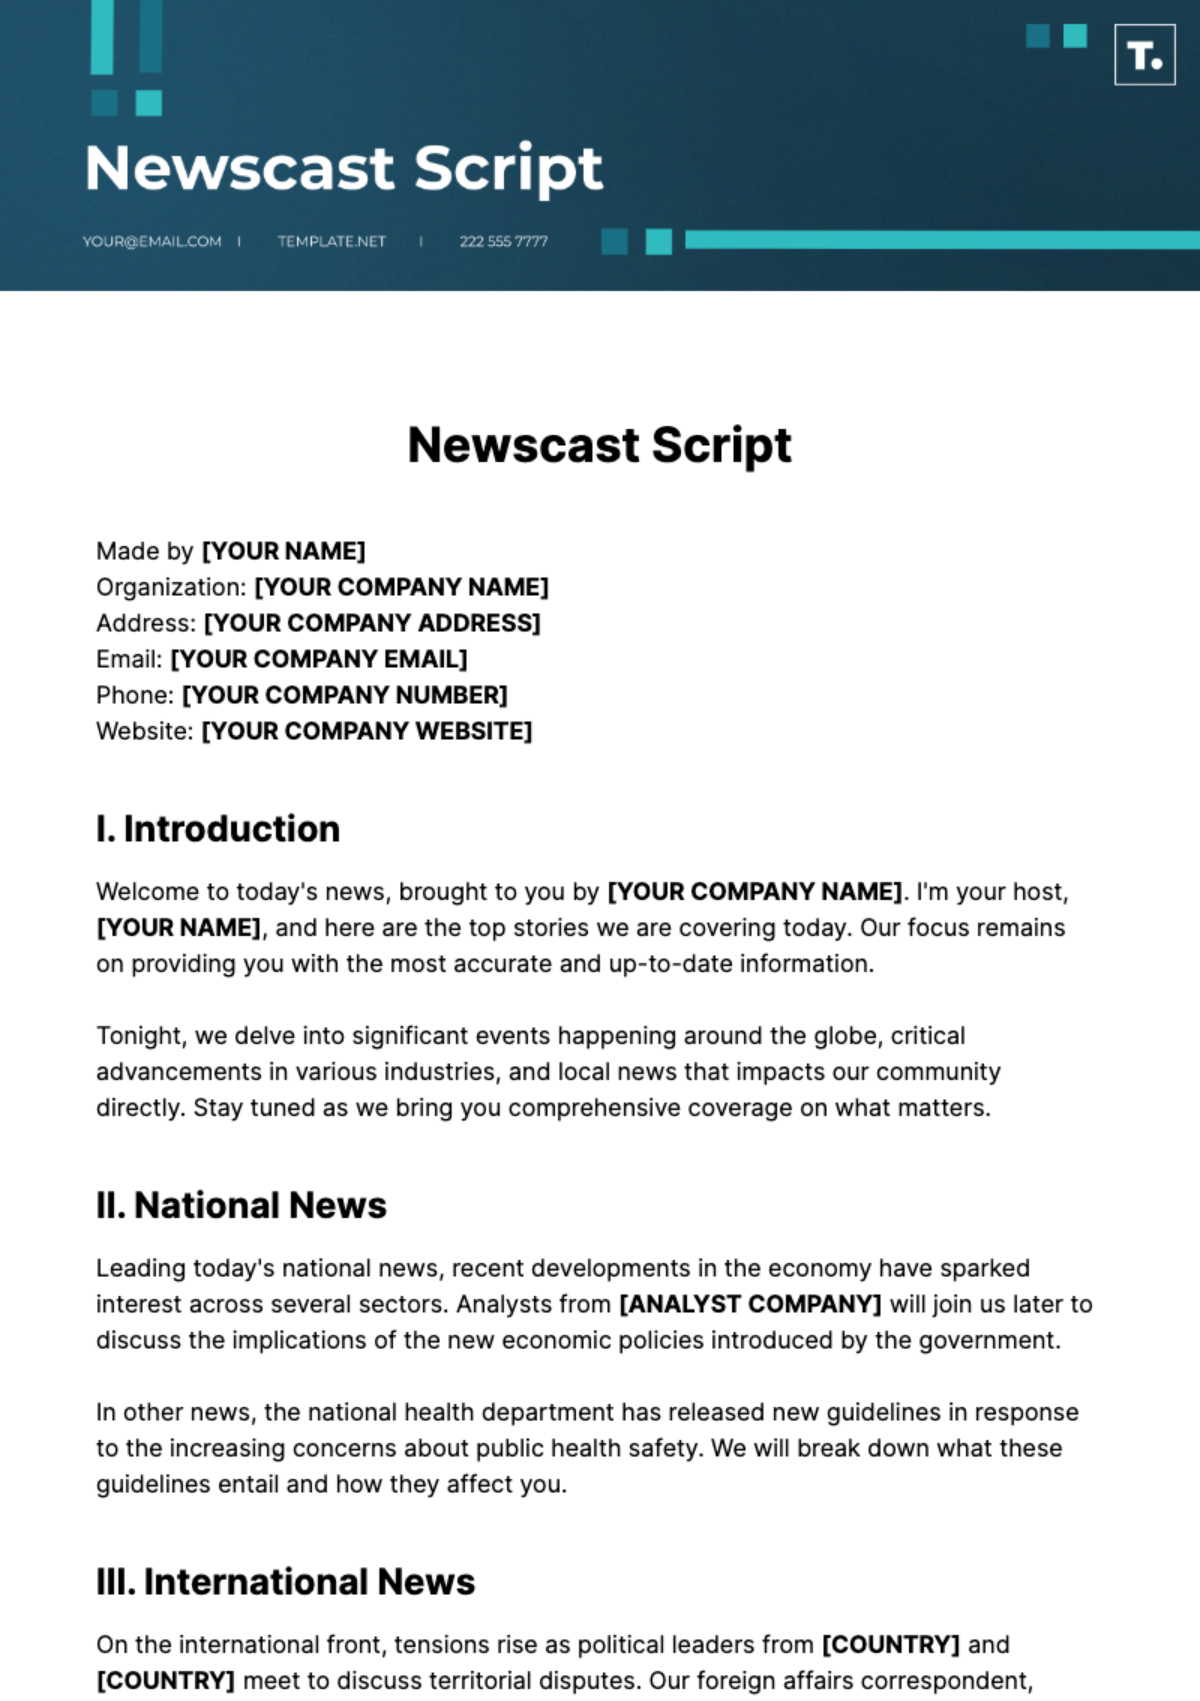 Newscast Script Template